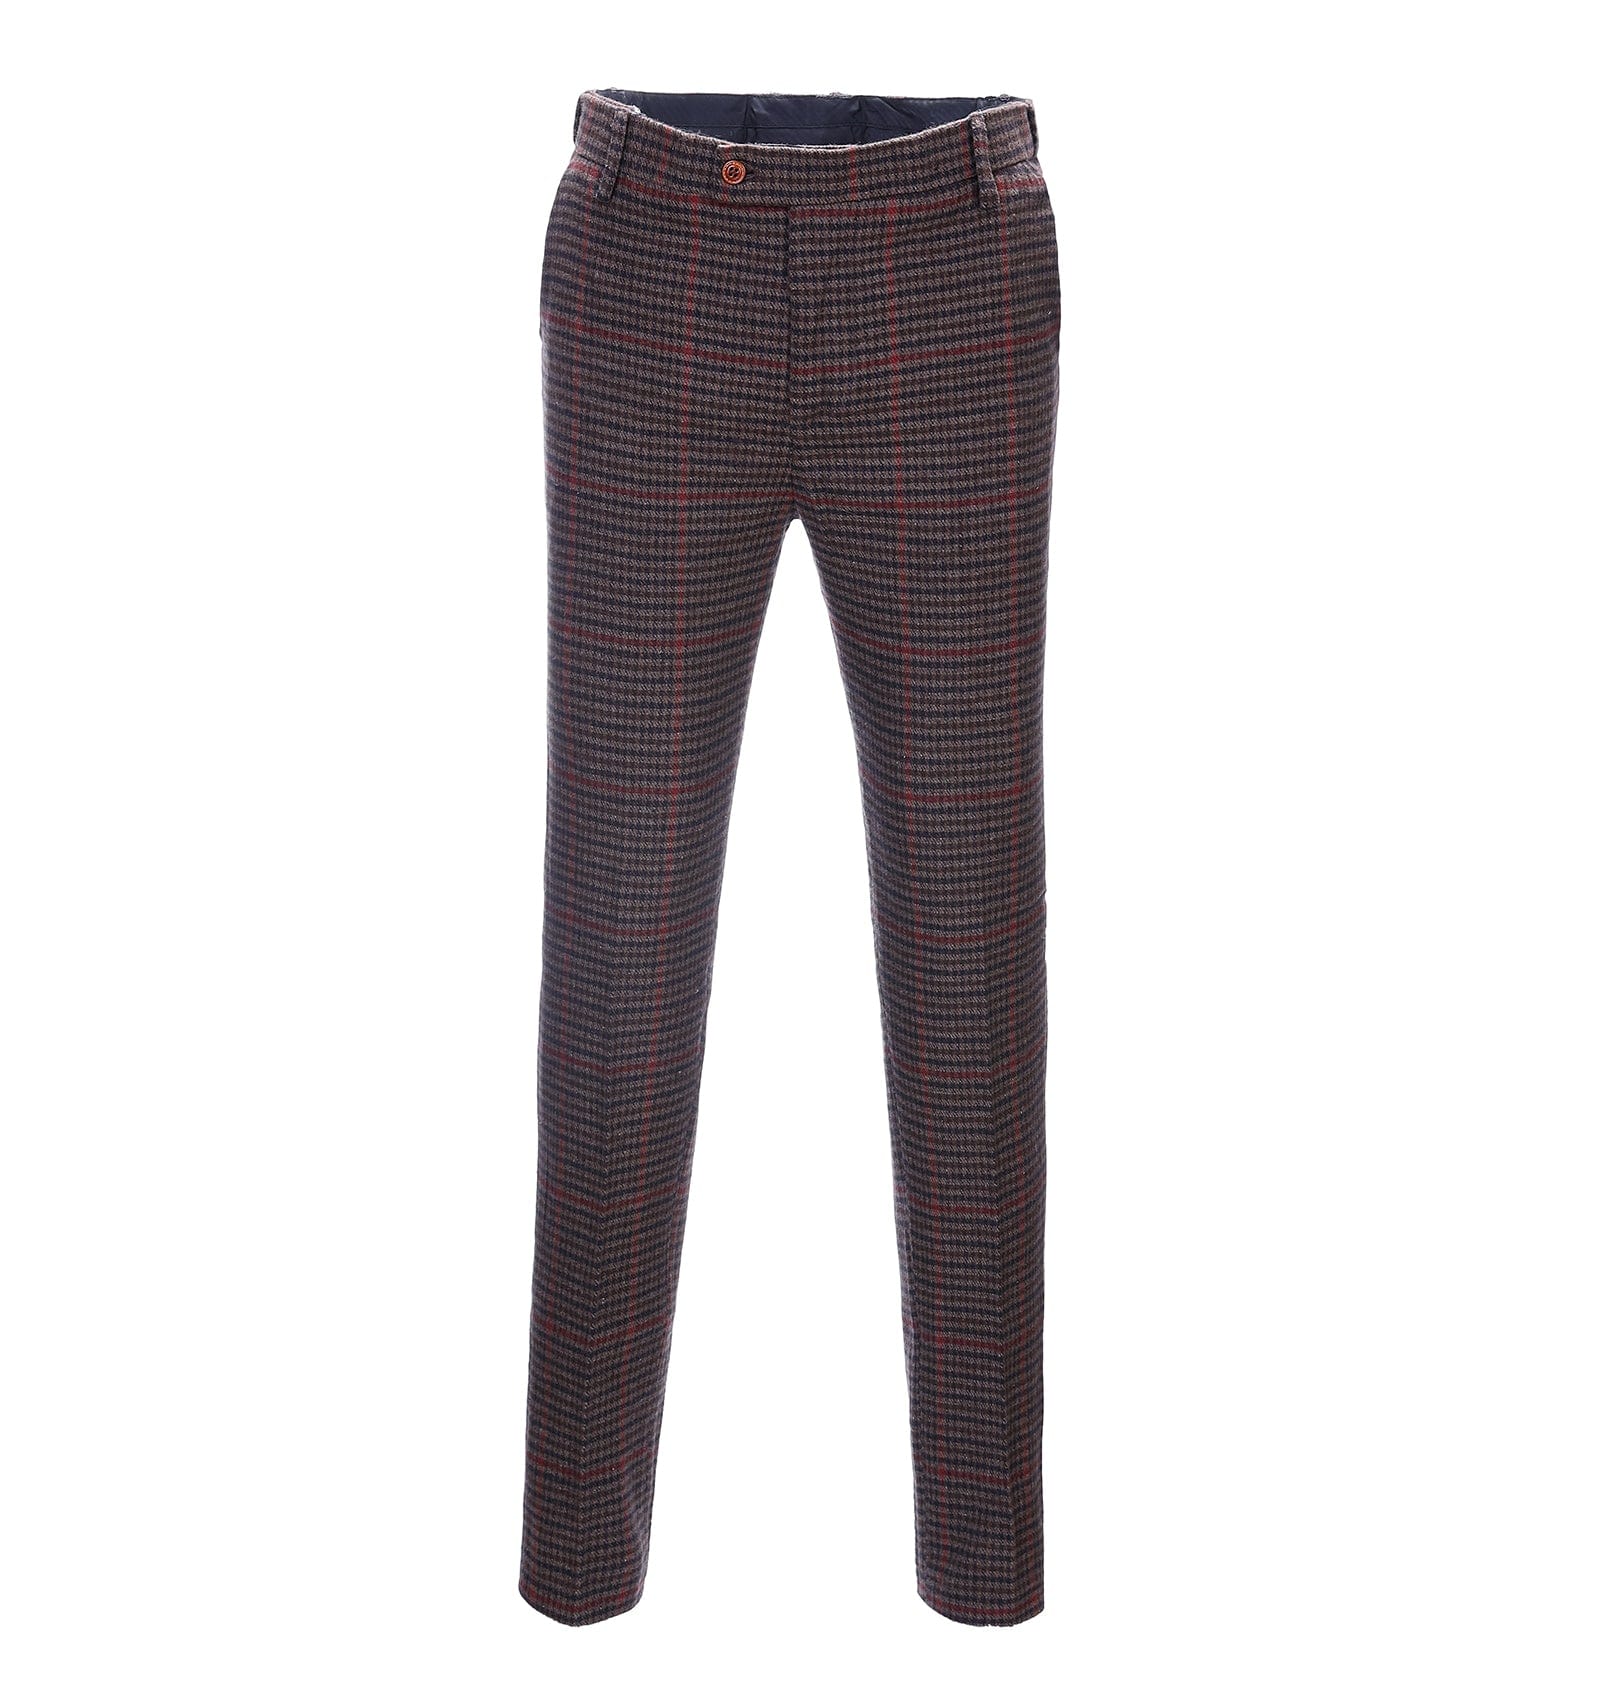 Harvey James Checked Trousers Pyjamas Nightwear Lounge Fleece Pants (RED  Check, XXL) : Amazon.co.uk: Fashion